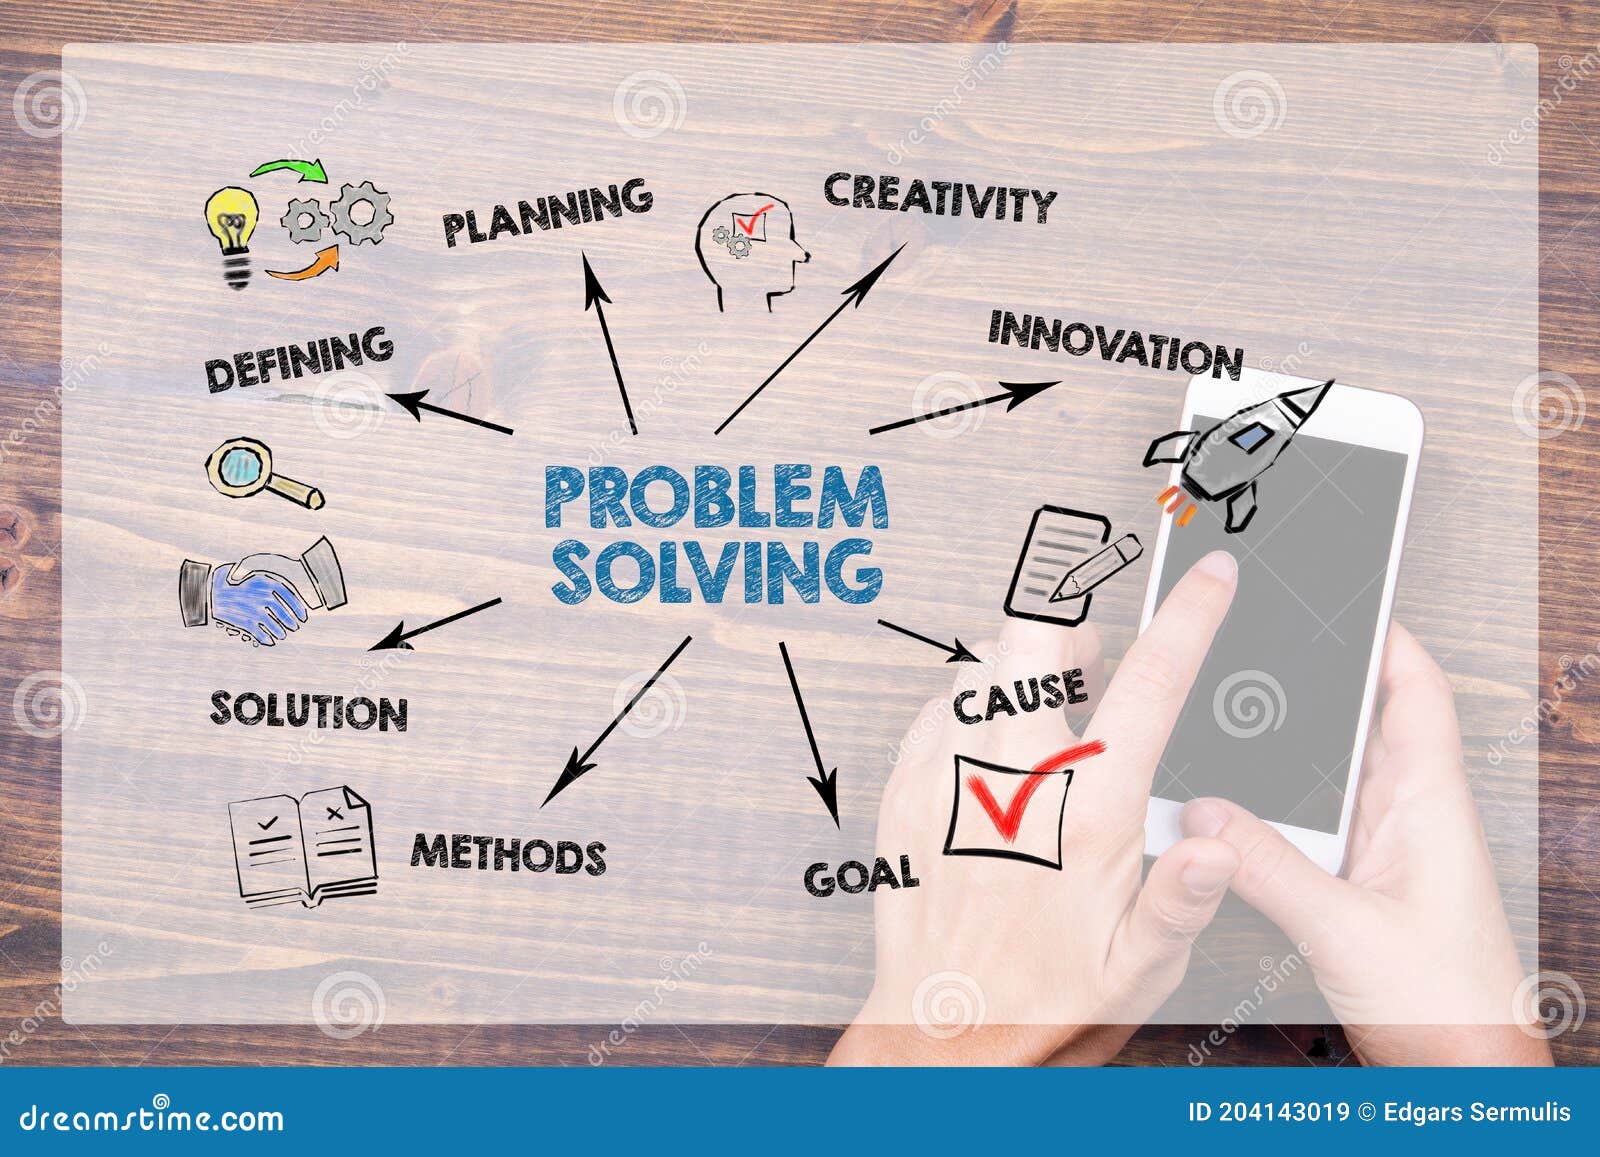 problem solving innovative ideas